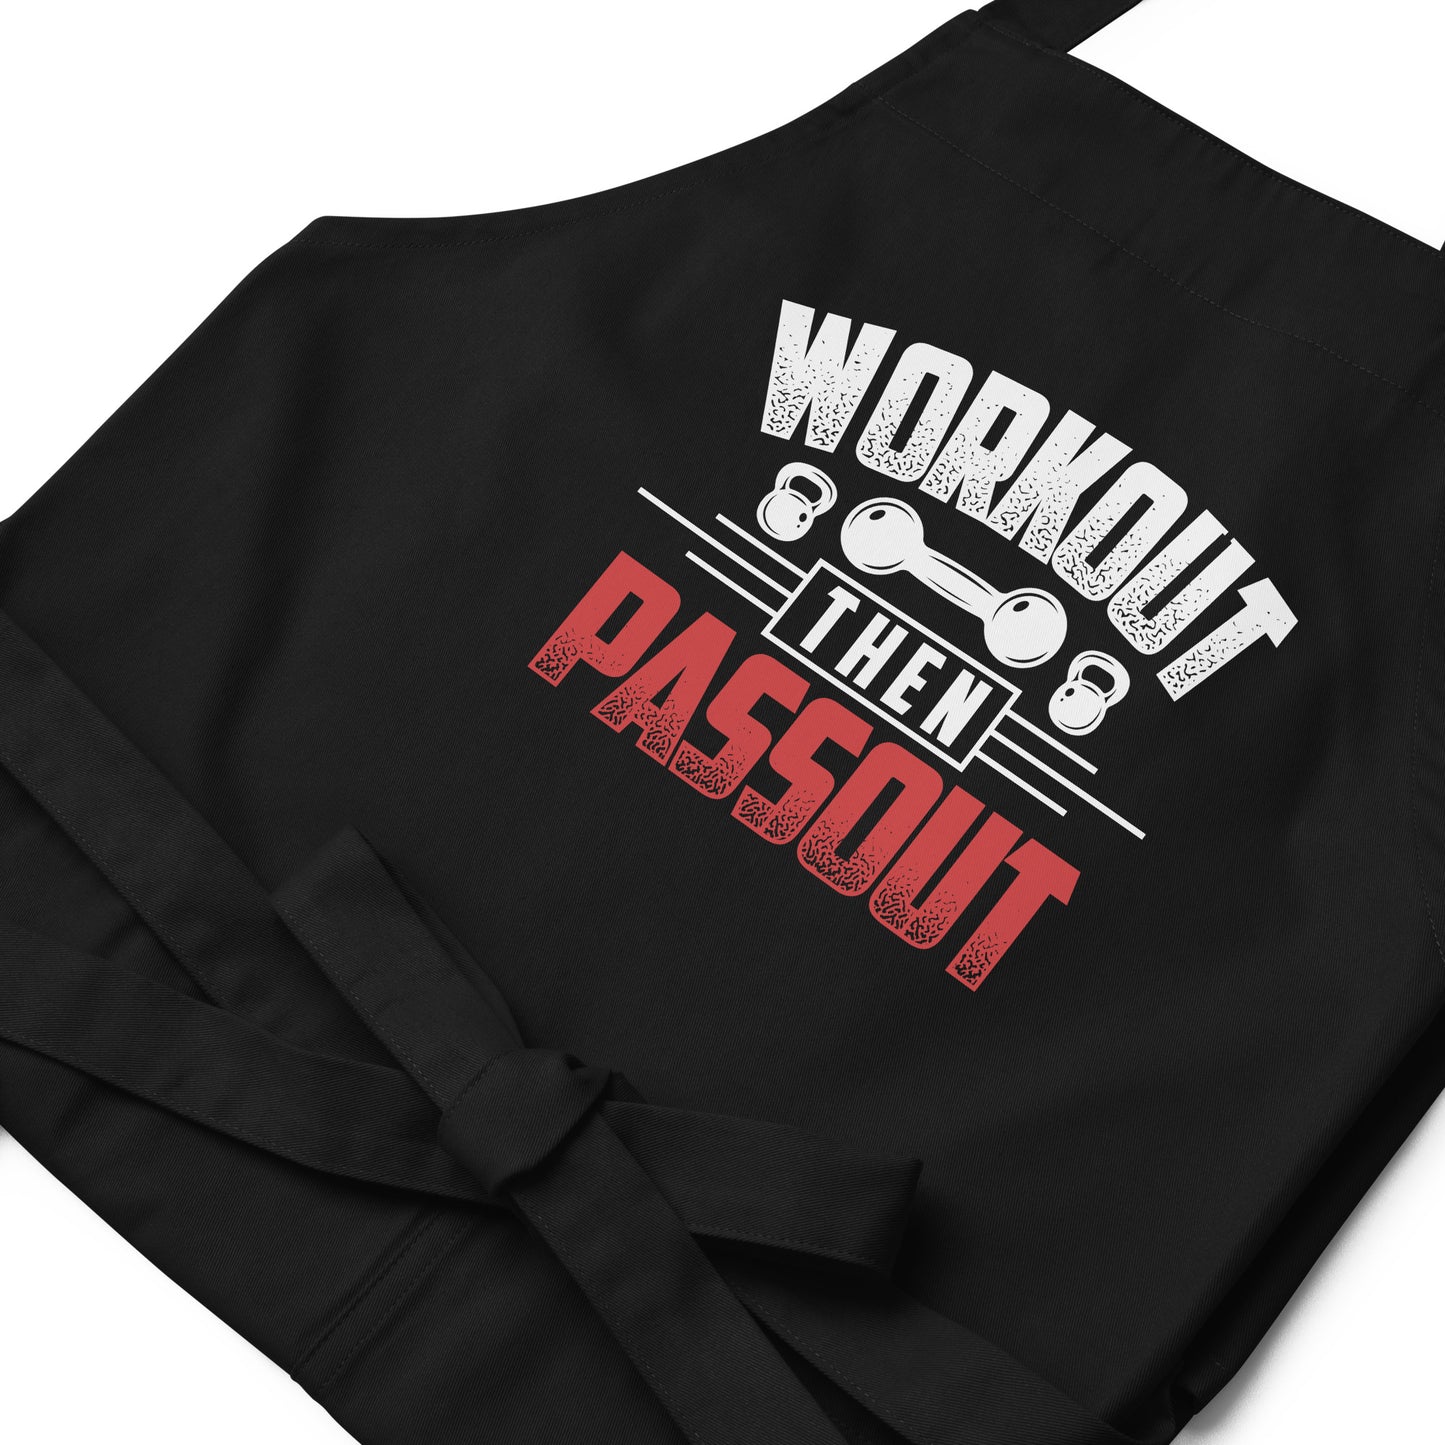 Workout Then Passout Organic cotton apron